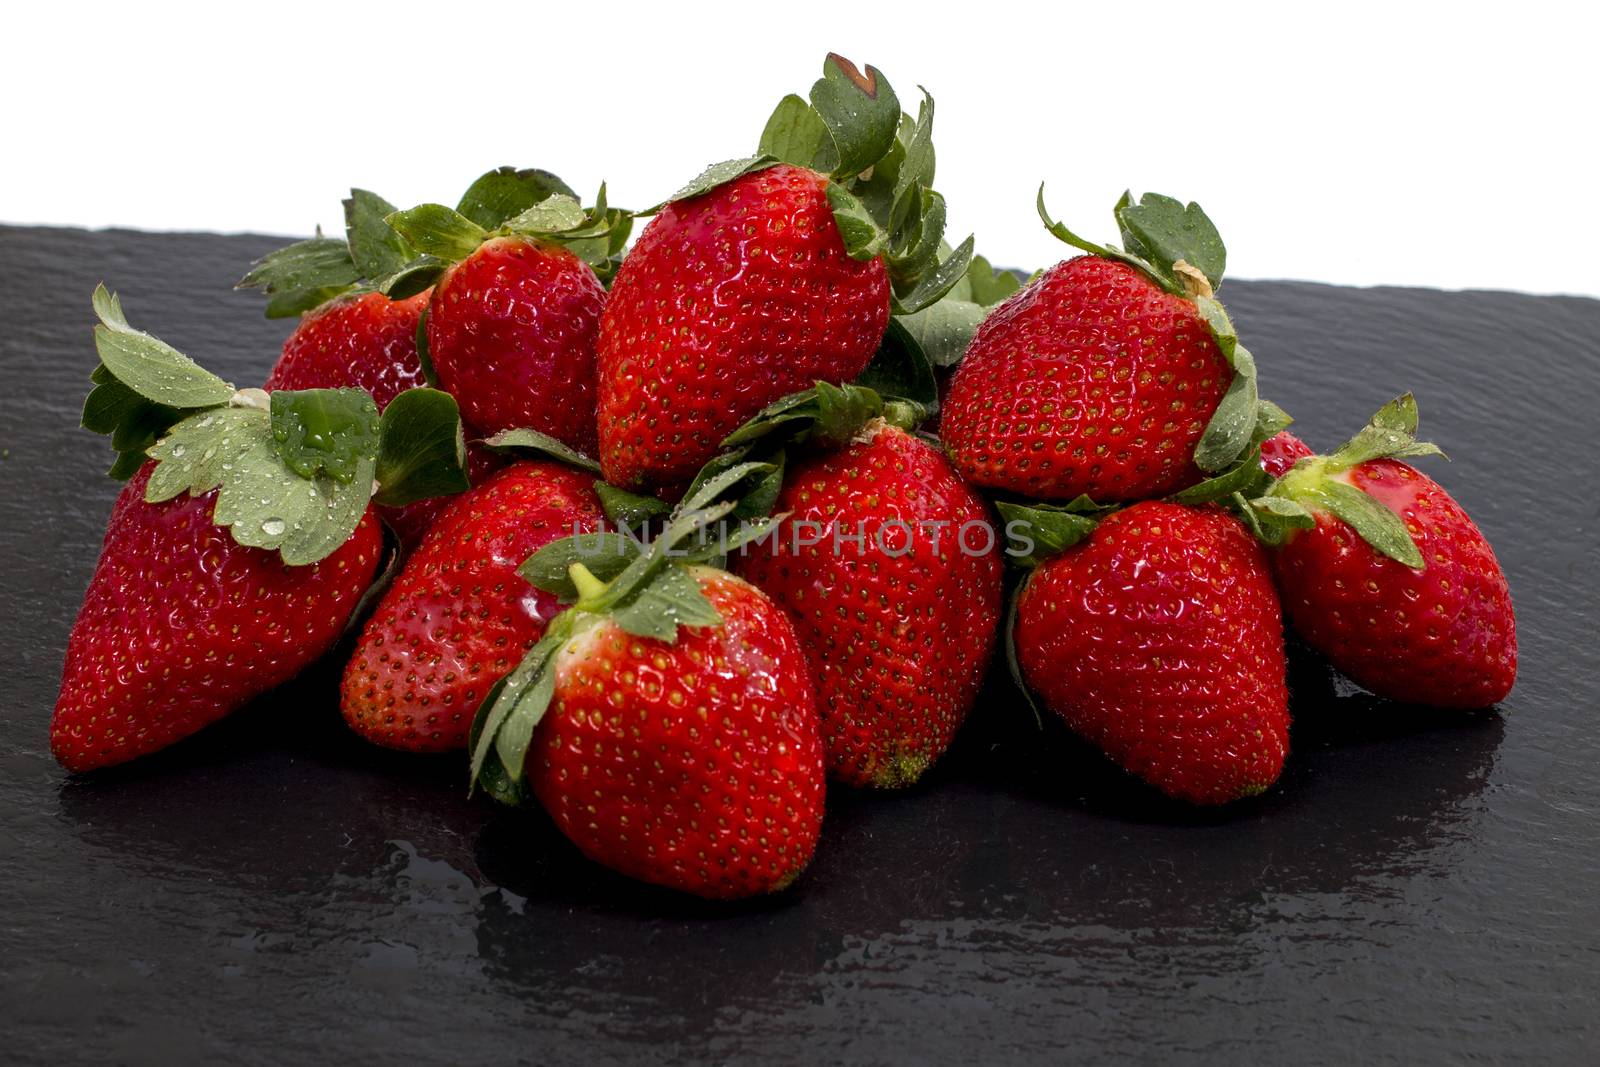 Red tasty strawberries on a black slab of schist.